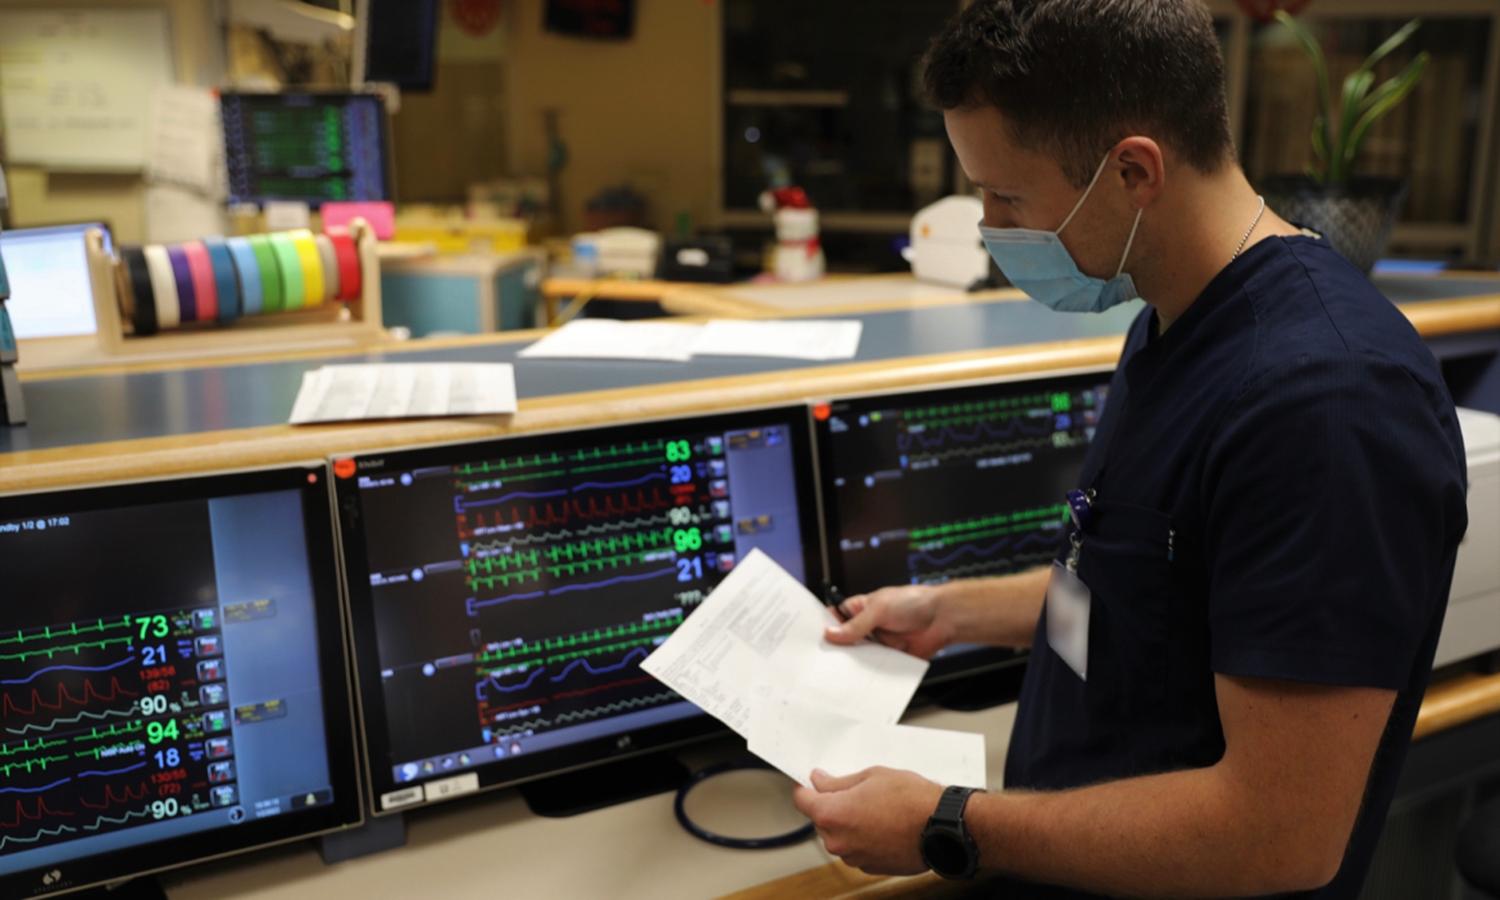 A nurse monitors patient vital signs